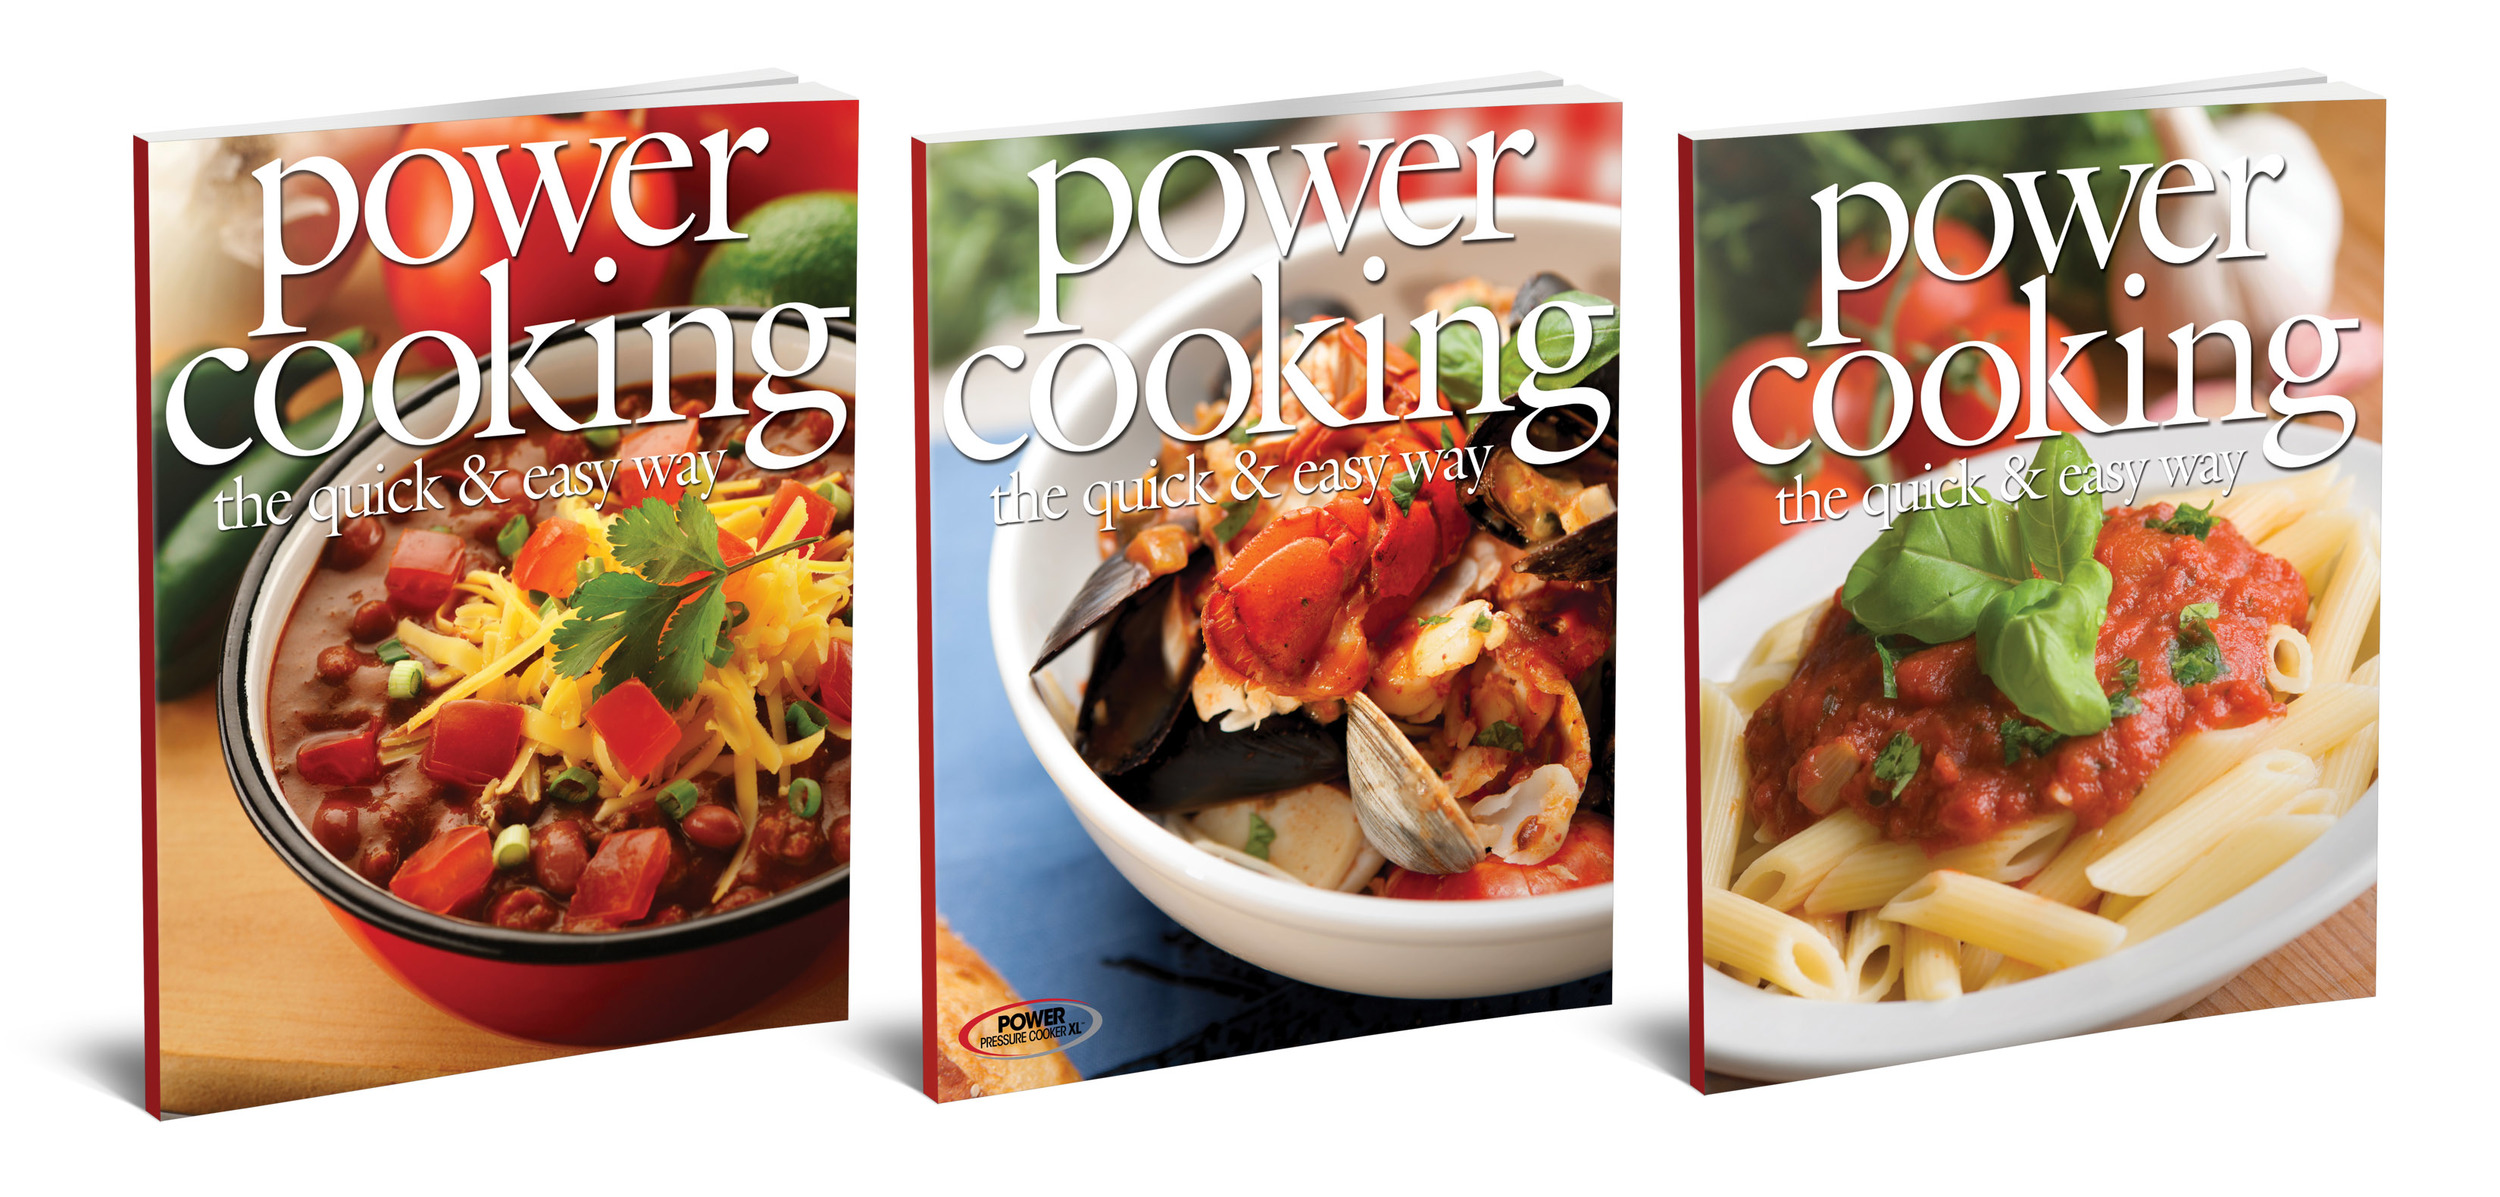 Tistar_Power Pressure Cooker_Recipe Book Cover_Mock Up.jpg